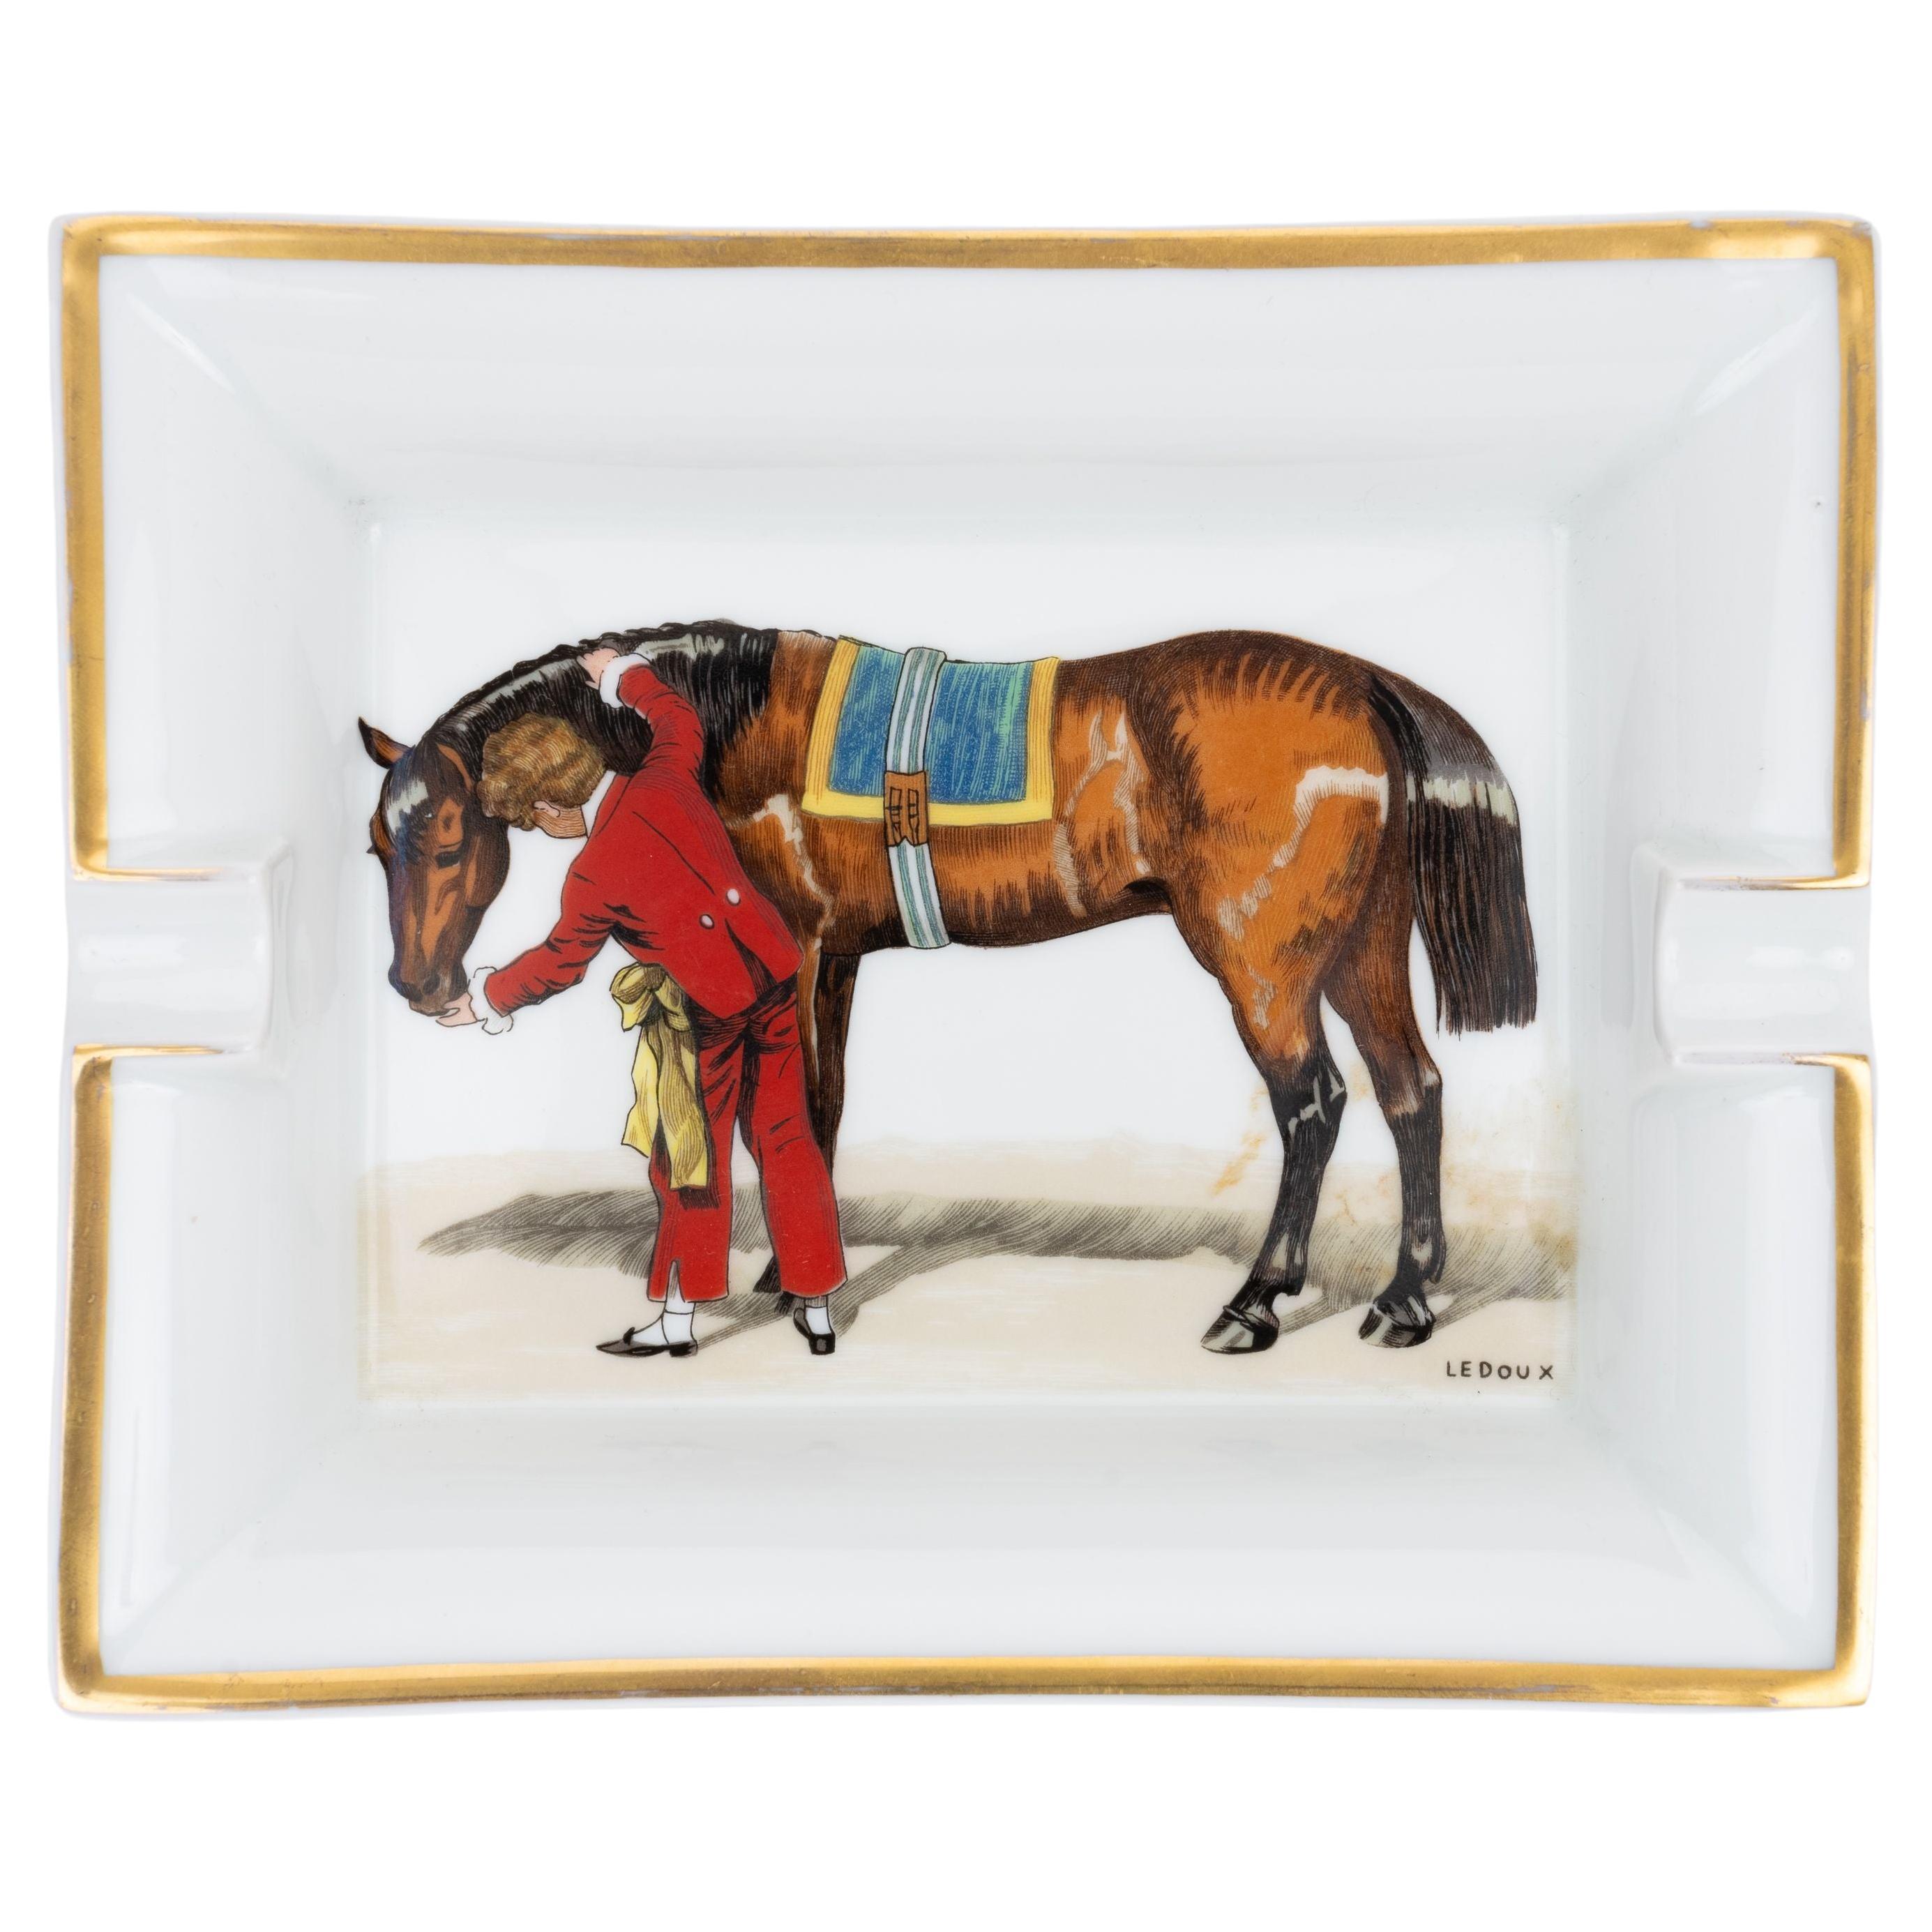 Hermès Pferd LeDoux Porzellan Aschenbecher im Angebot